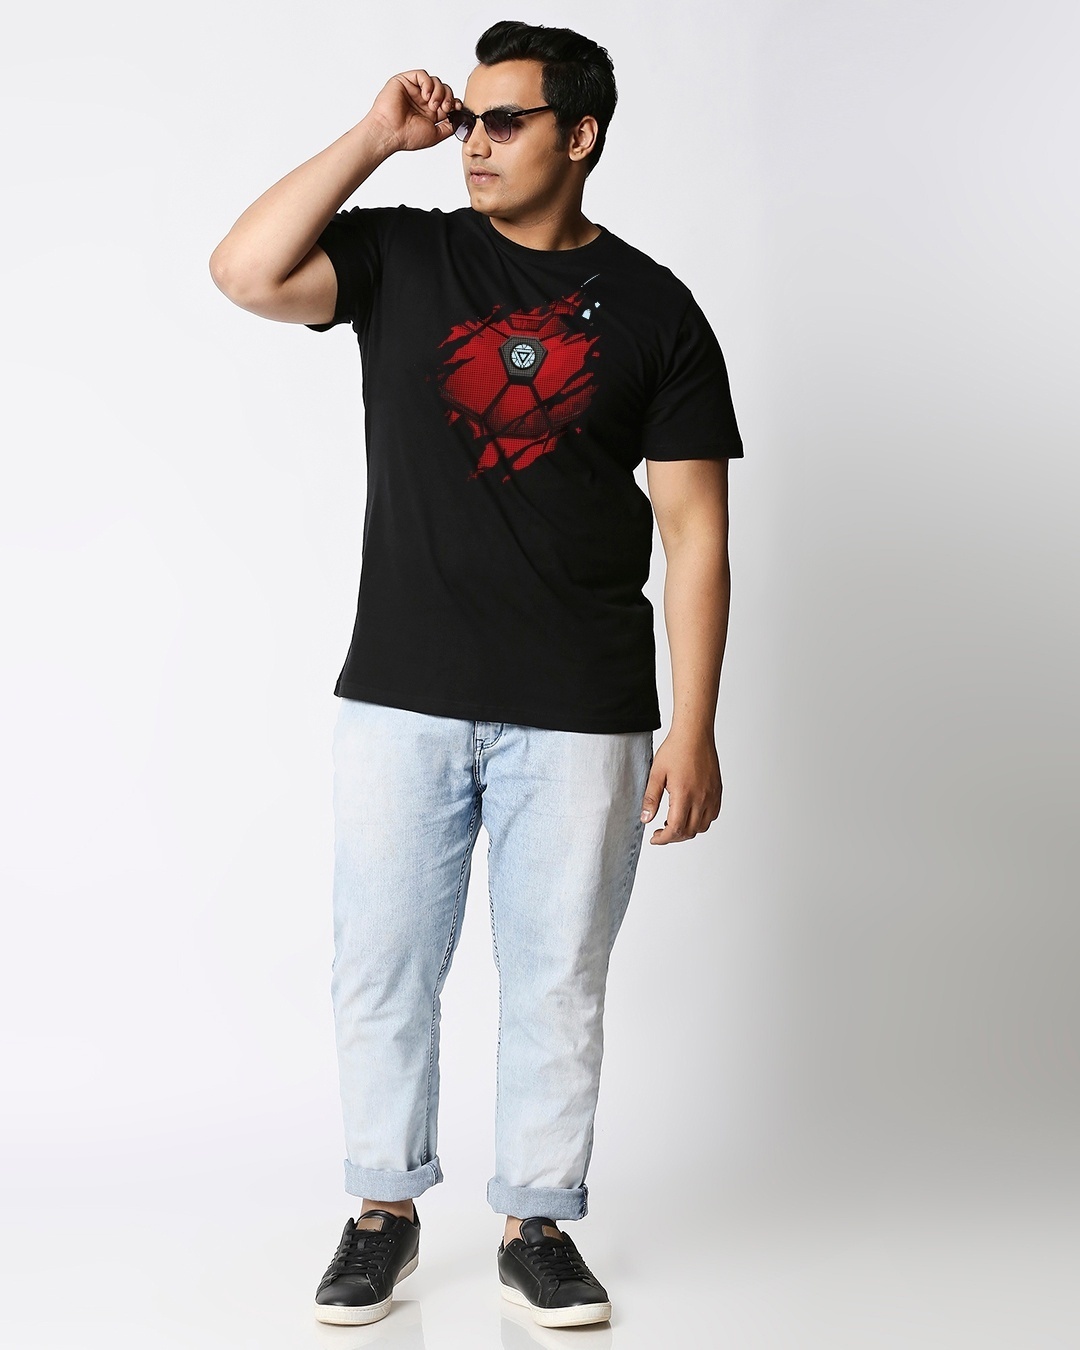 Shop Men's Black Iron Man of War (AVL) Graphic Printed Plus Size T-shirt-Design